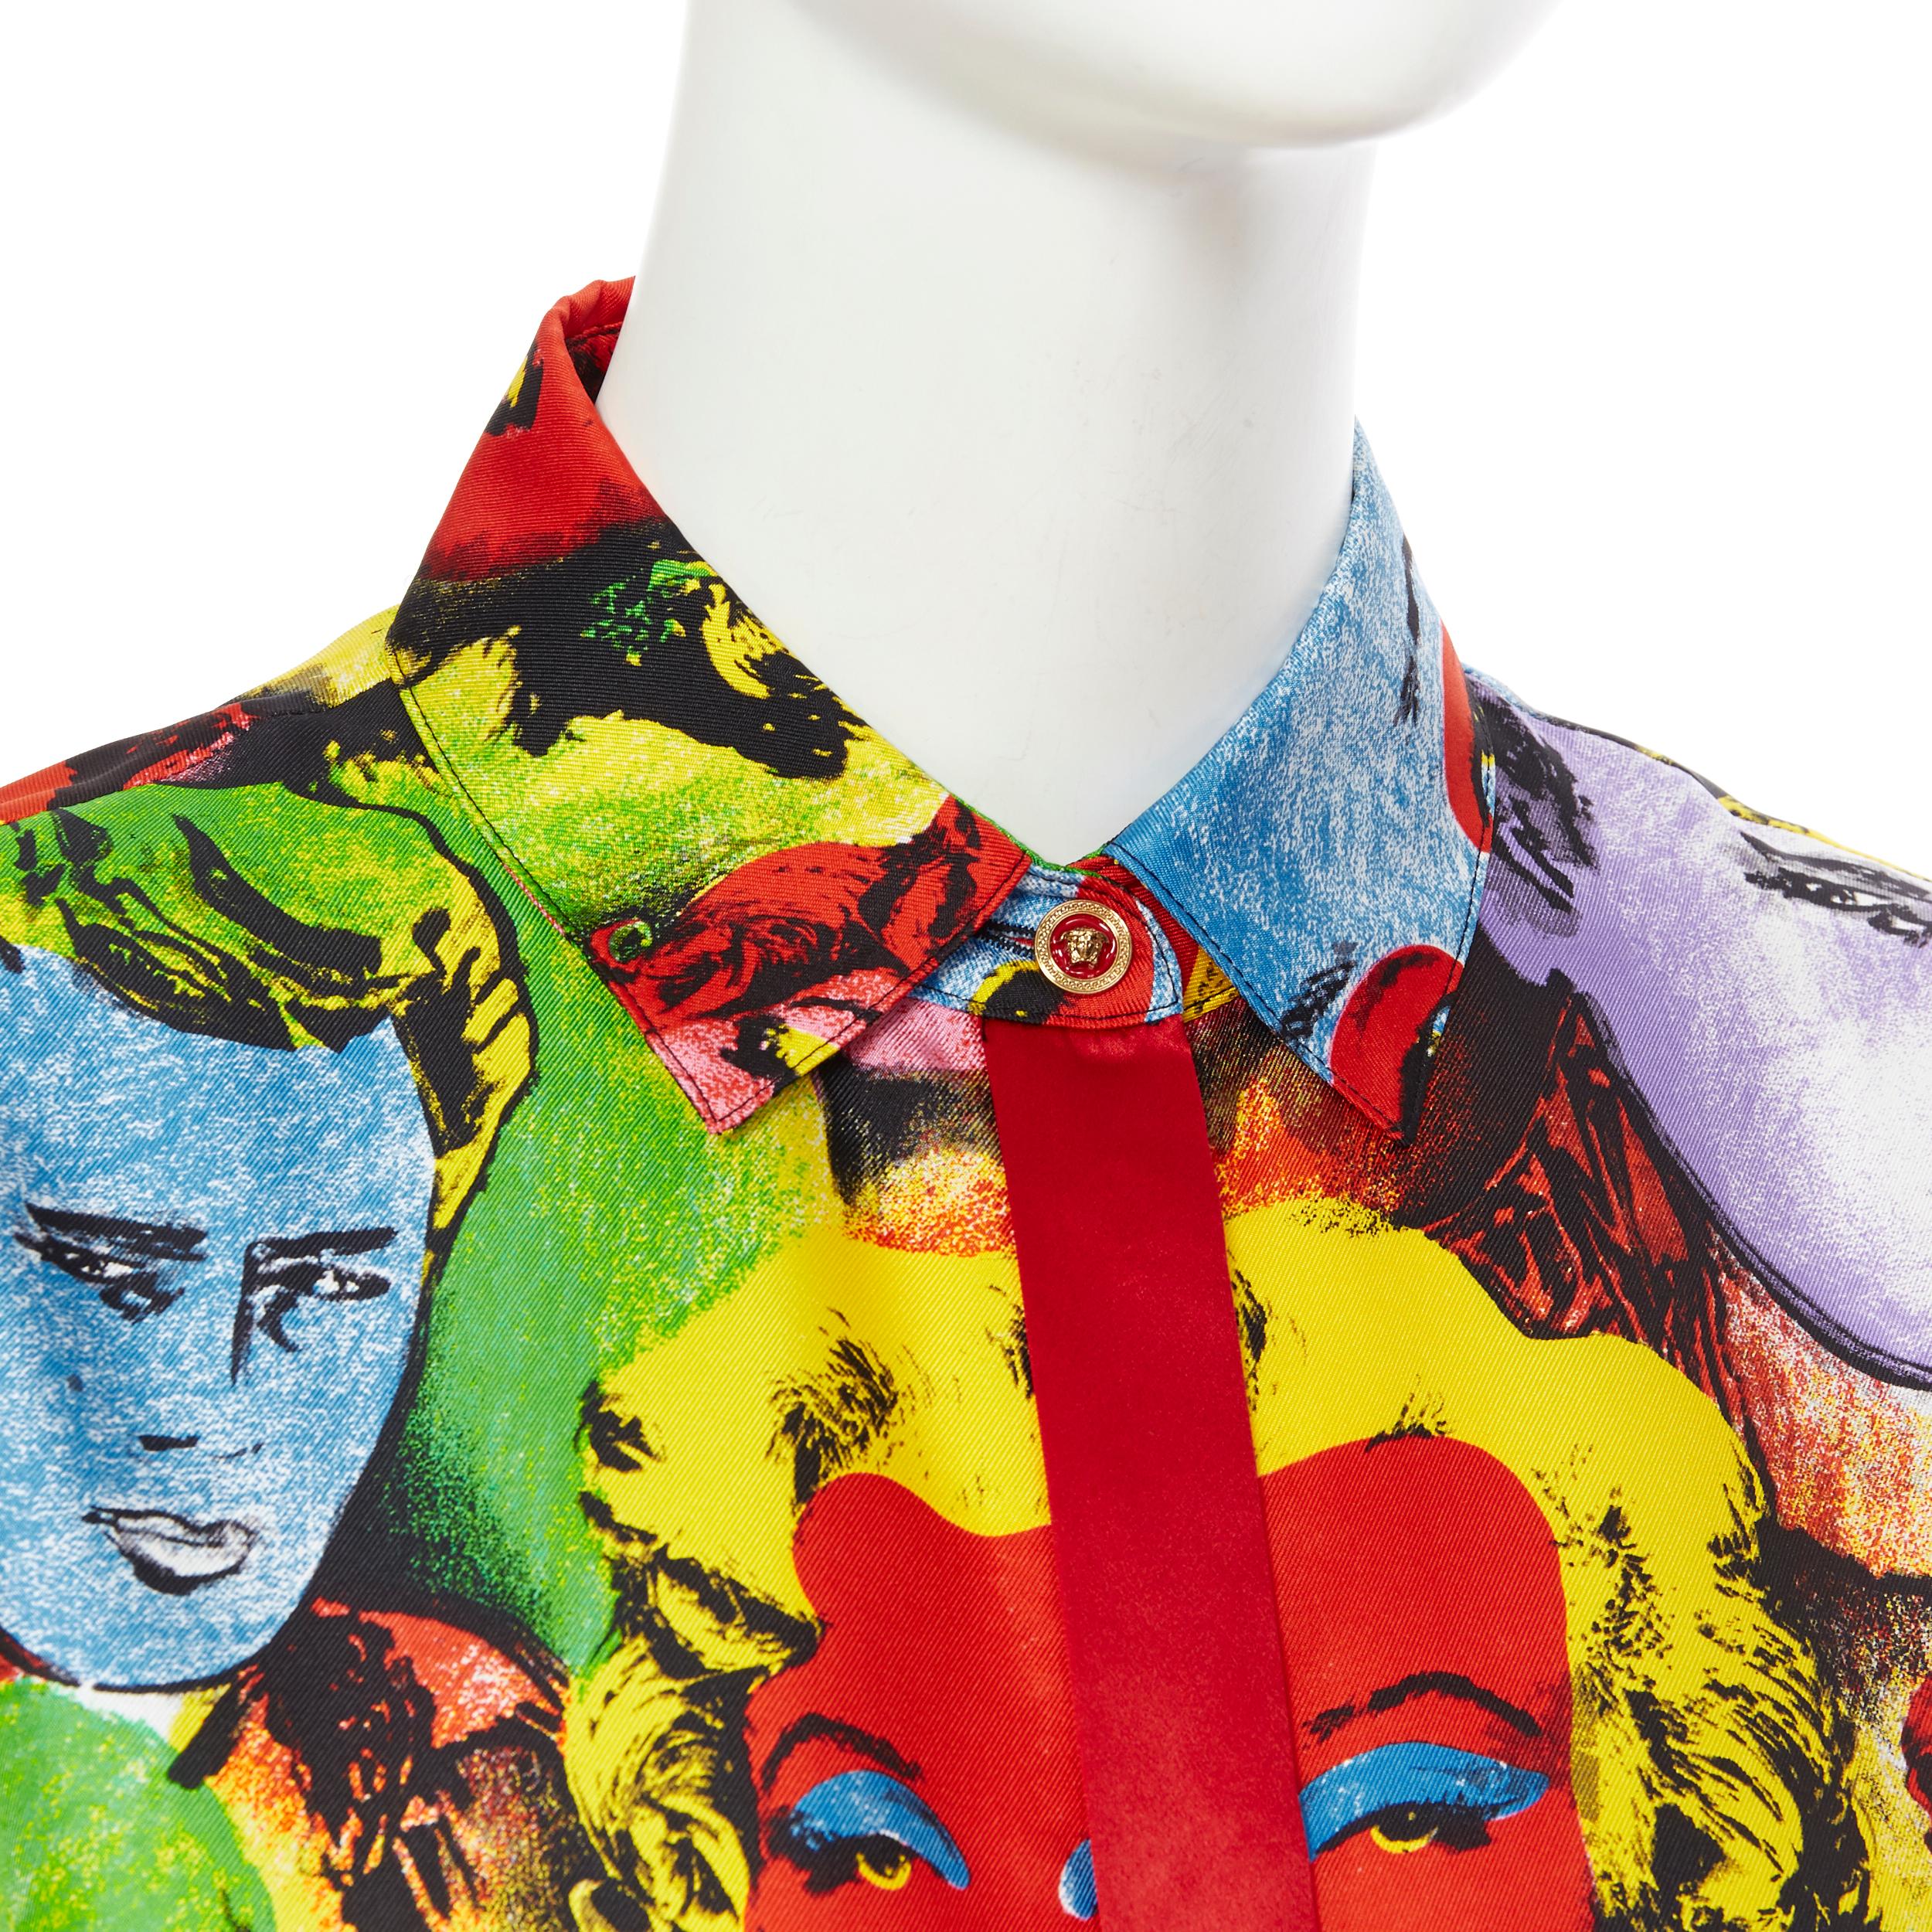 new VERSACE SS18 Runway Tribute pop art Marilyn Monroe James Dean shirt IT44 L
Brand: Versace
Designer: Donatella Versace
Collection: SS 2018
As seen on: Cardi B
Model Name / Style: Silk shirt
Material: Silk
Color: Multicolour
Pattern: